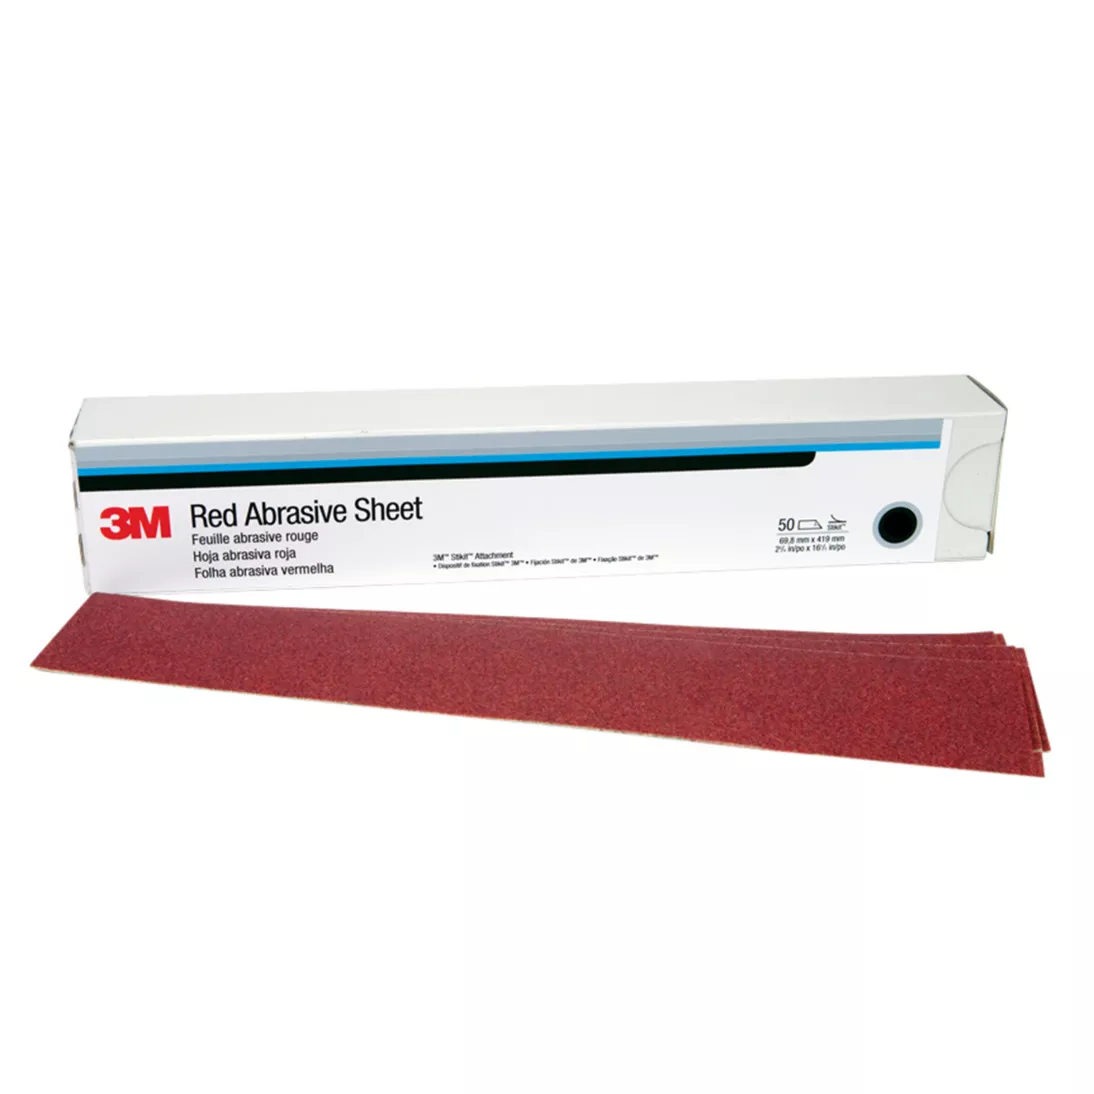 3M™ Hookit™ Red Abrasive Sheet, 01182, 40, 2-3/4 in x 16 1/2 in, 25
sheets per carton, 5 cartons per case